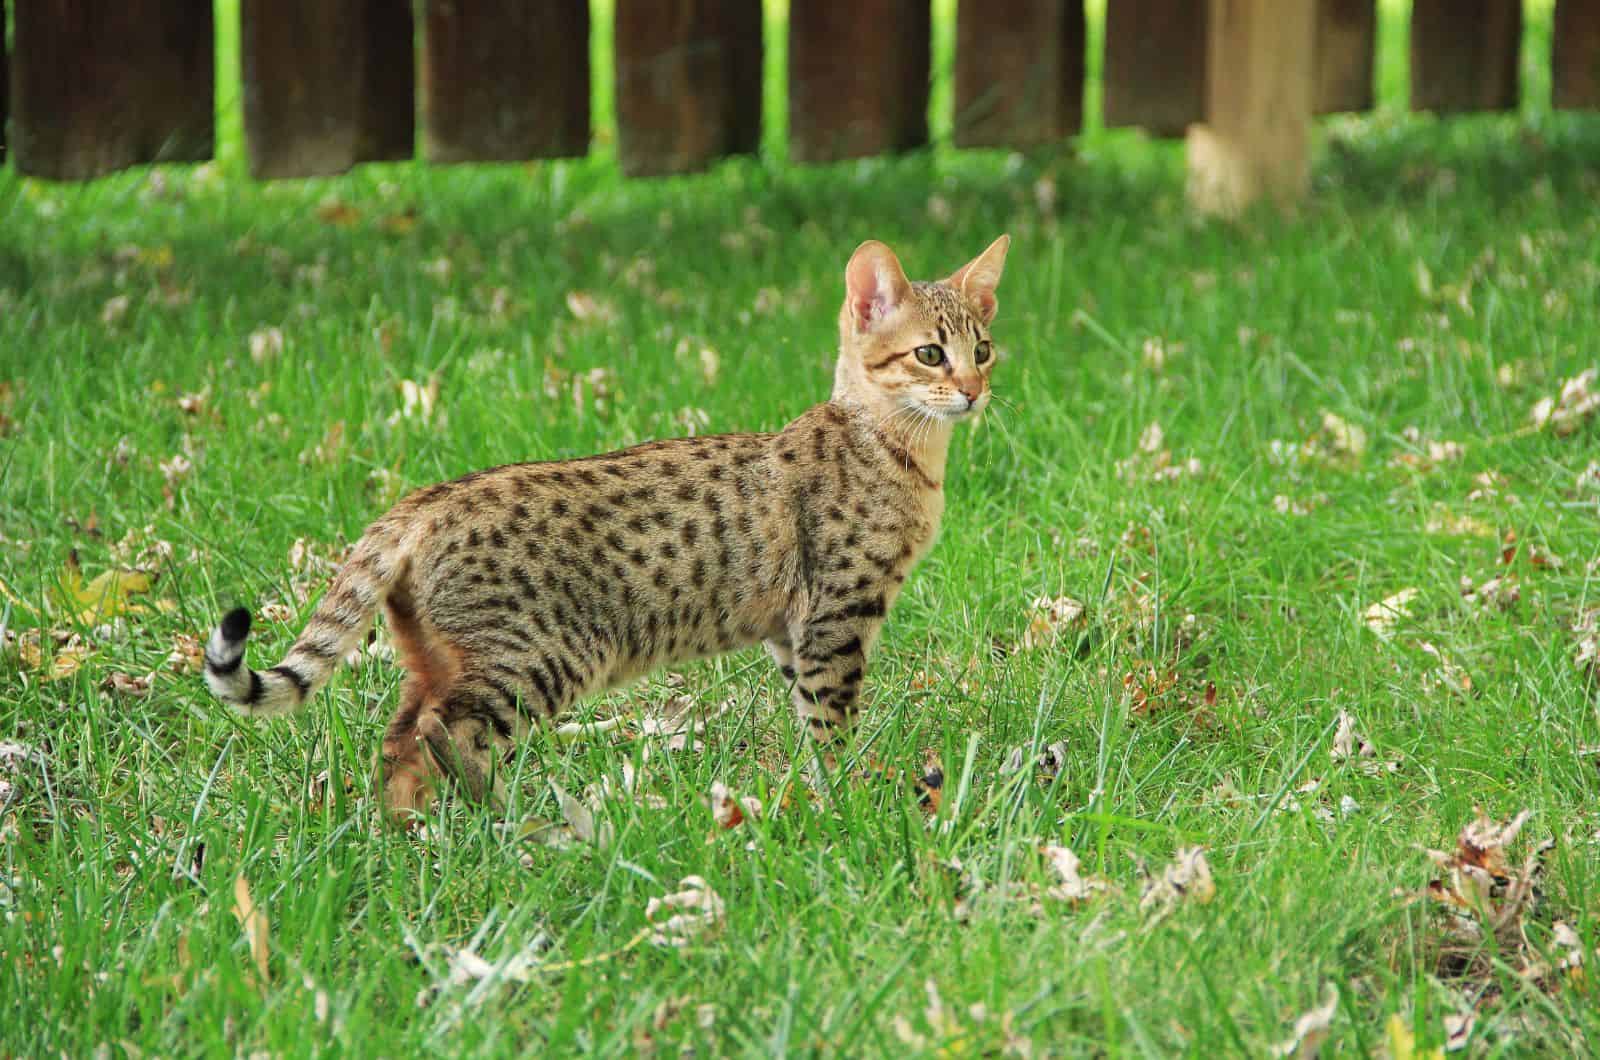 Savannah Cat standing on grass